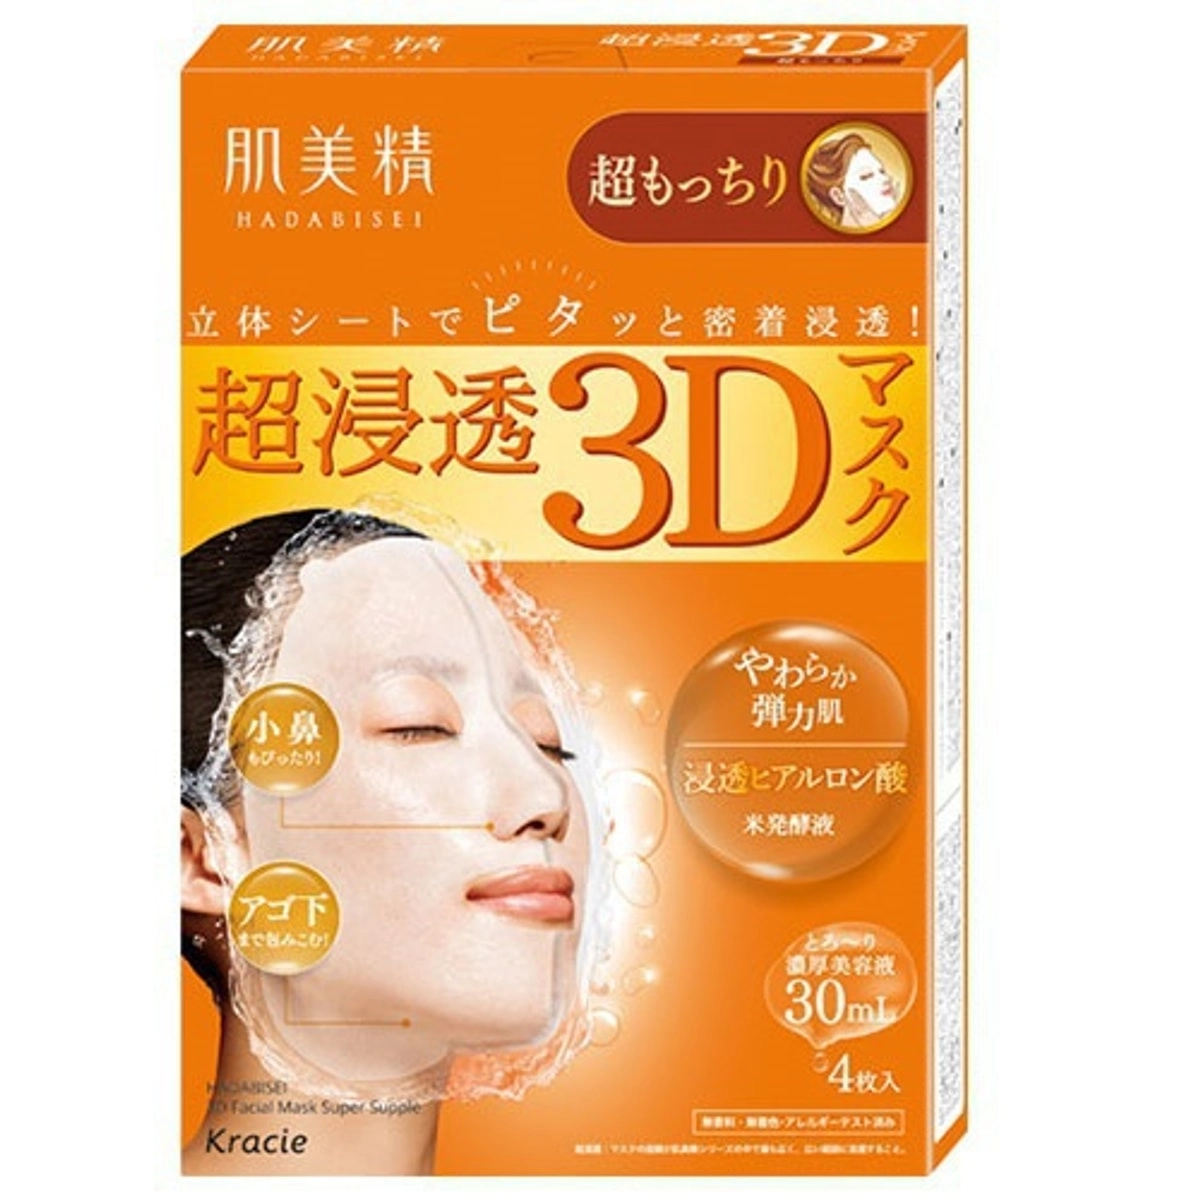 Зволожуюча 3D-маска для обличчя - Kracie Hadabisei Moisturizing Facial Mask, 4 шт - фото N1